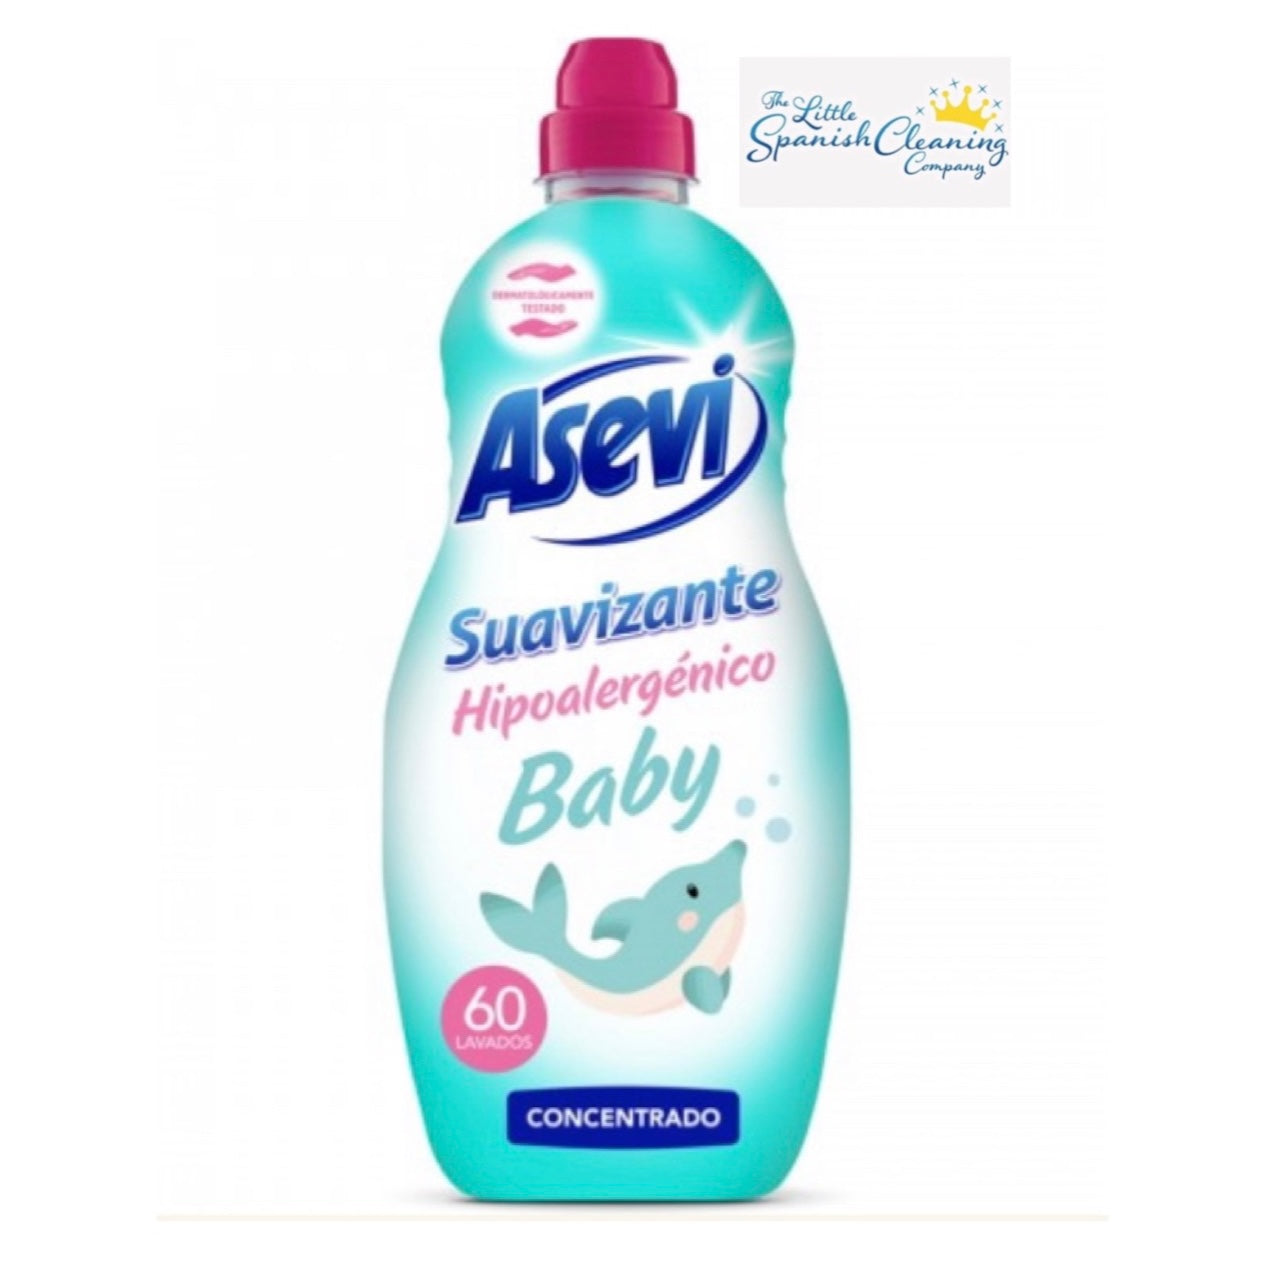 Asevi “Baby” hypoallergenic Fabric Softner